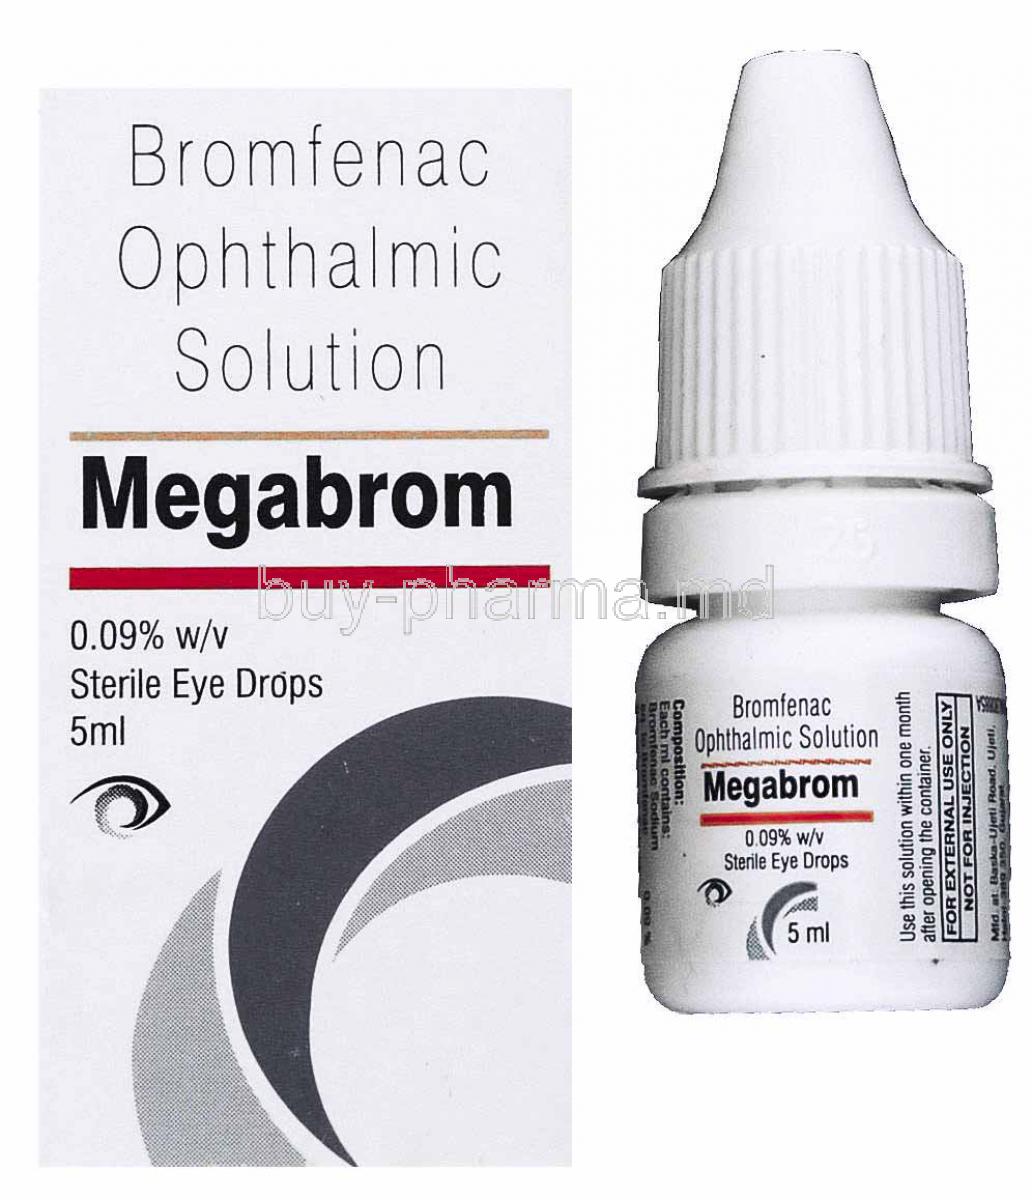 Megabrom, Generic Xibrom,  Bromfenac Sodium Eye Drops